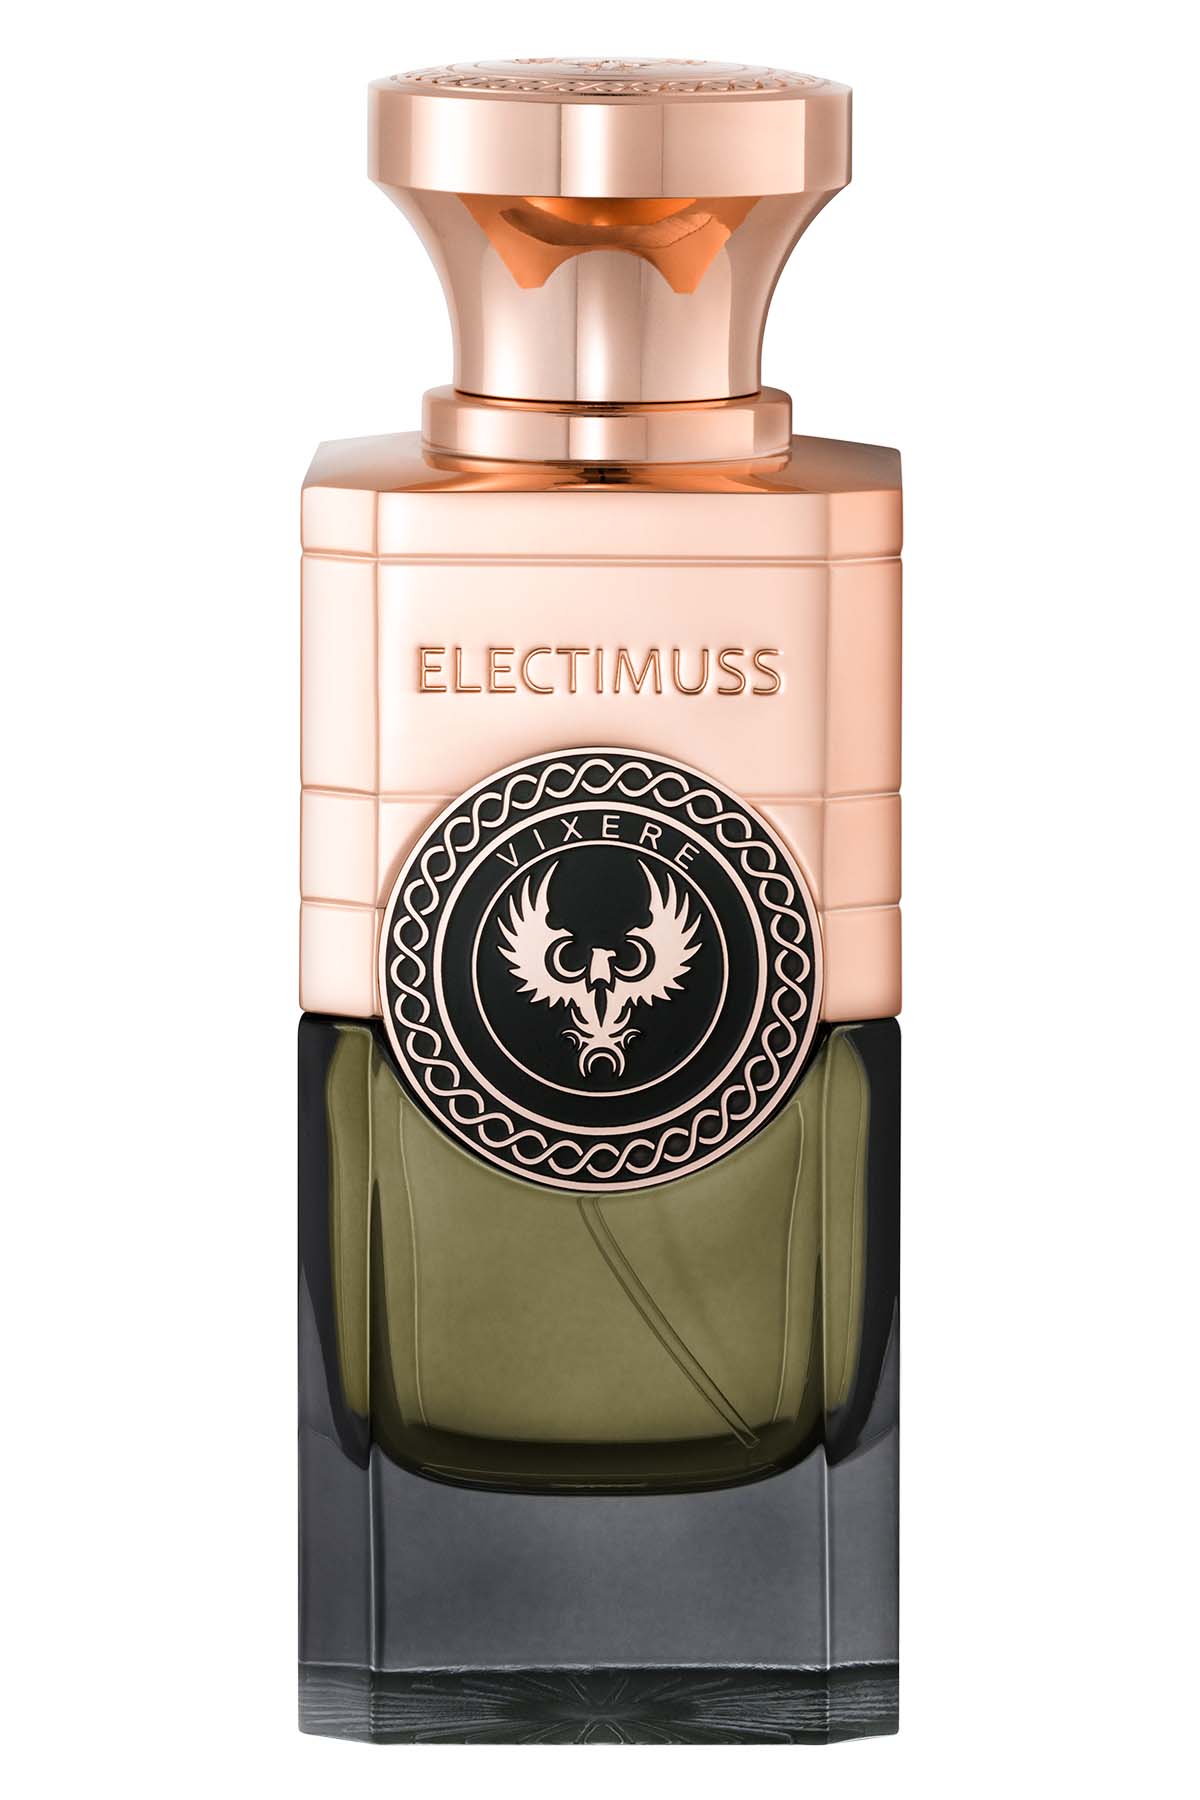 Electimuss Vixere Extrait de Parfum